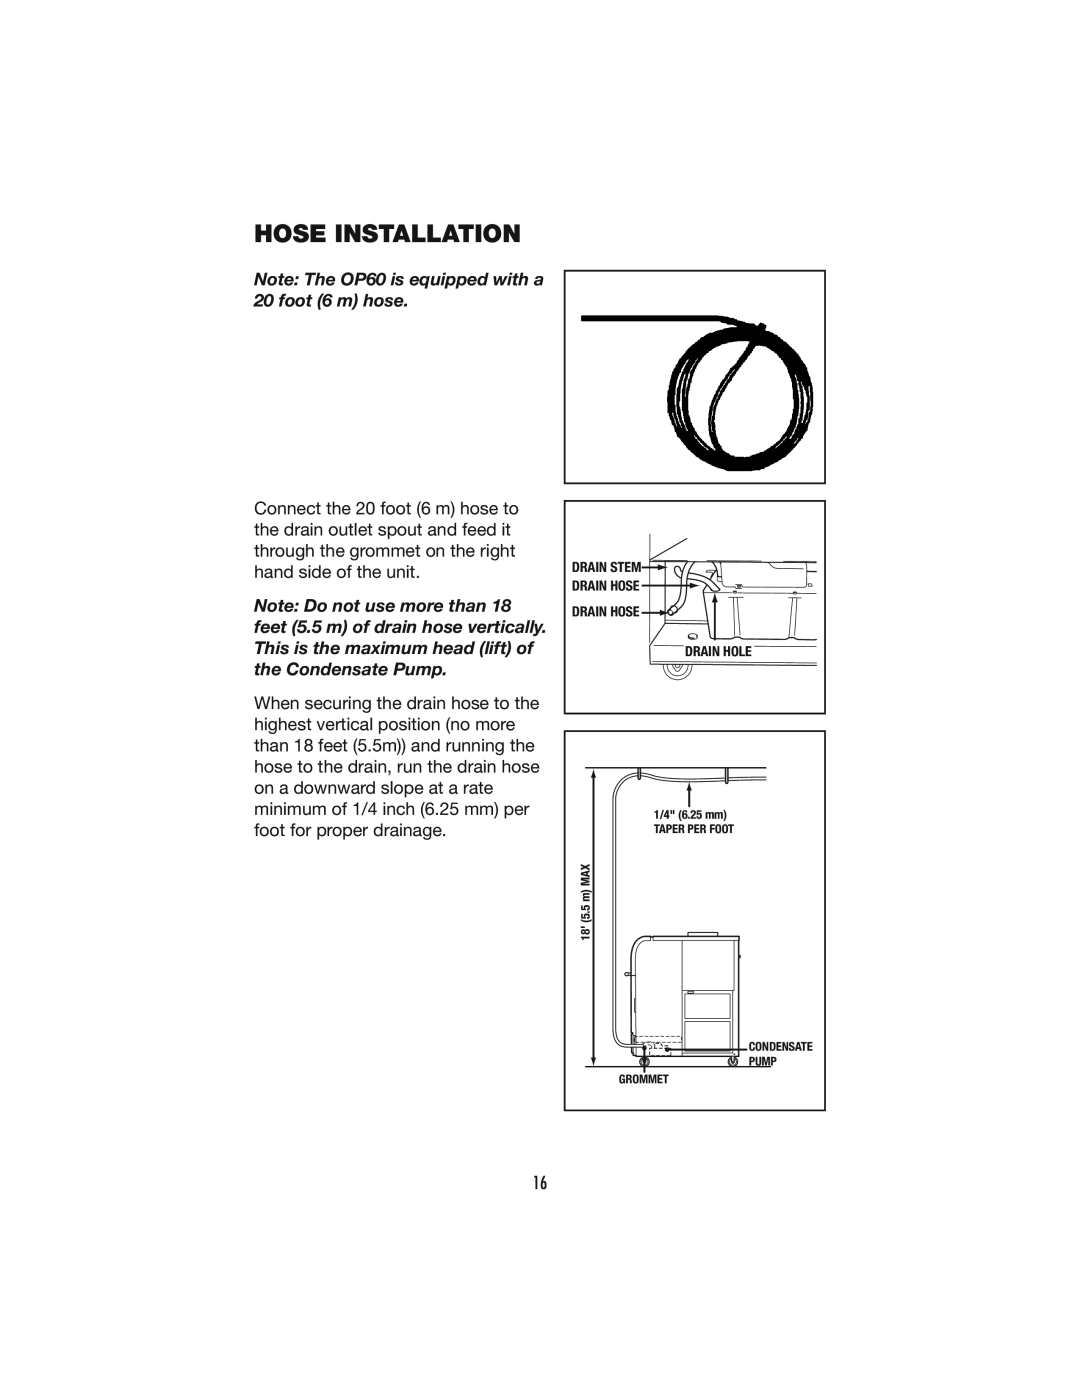 Denso PRO 60 operation manual Hose Installation 